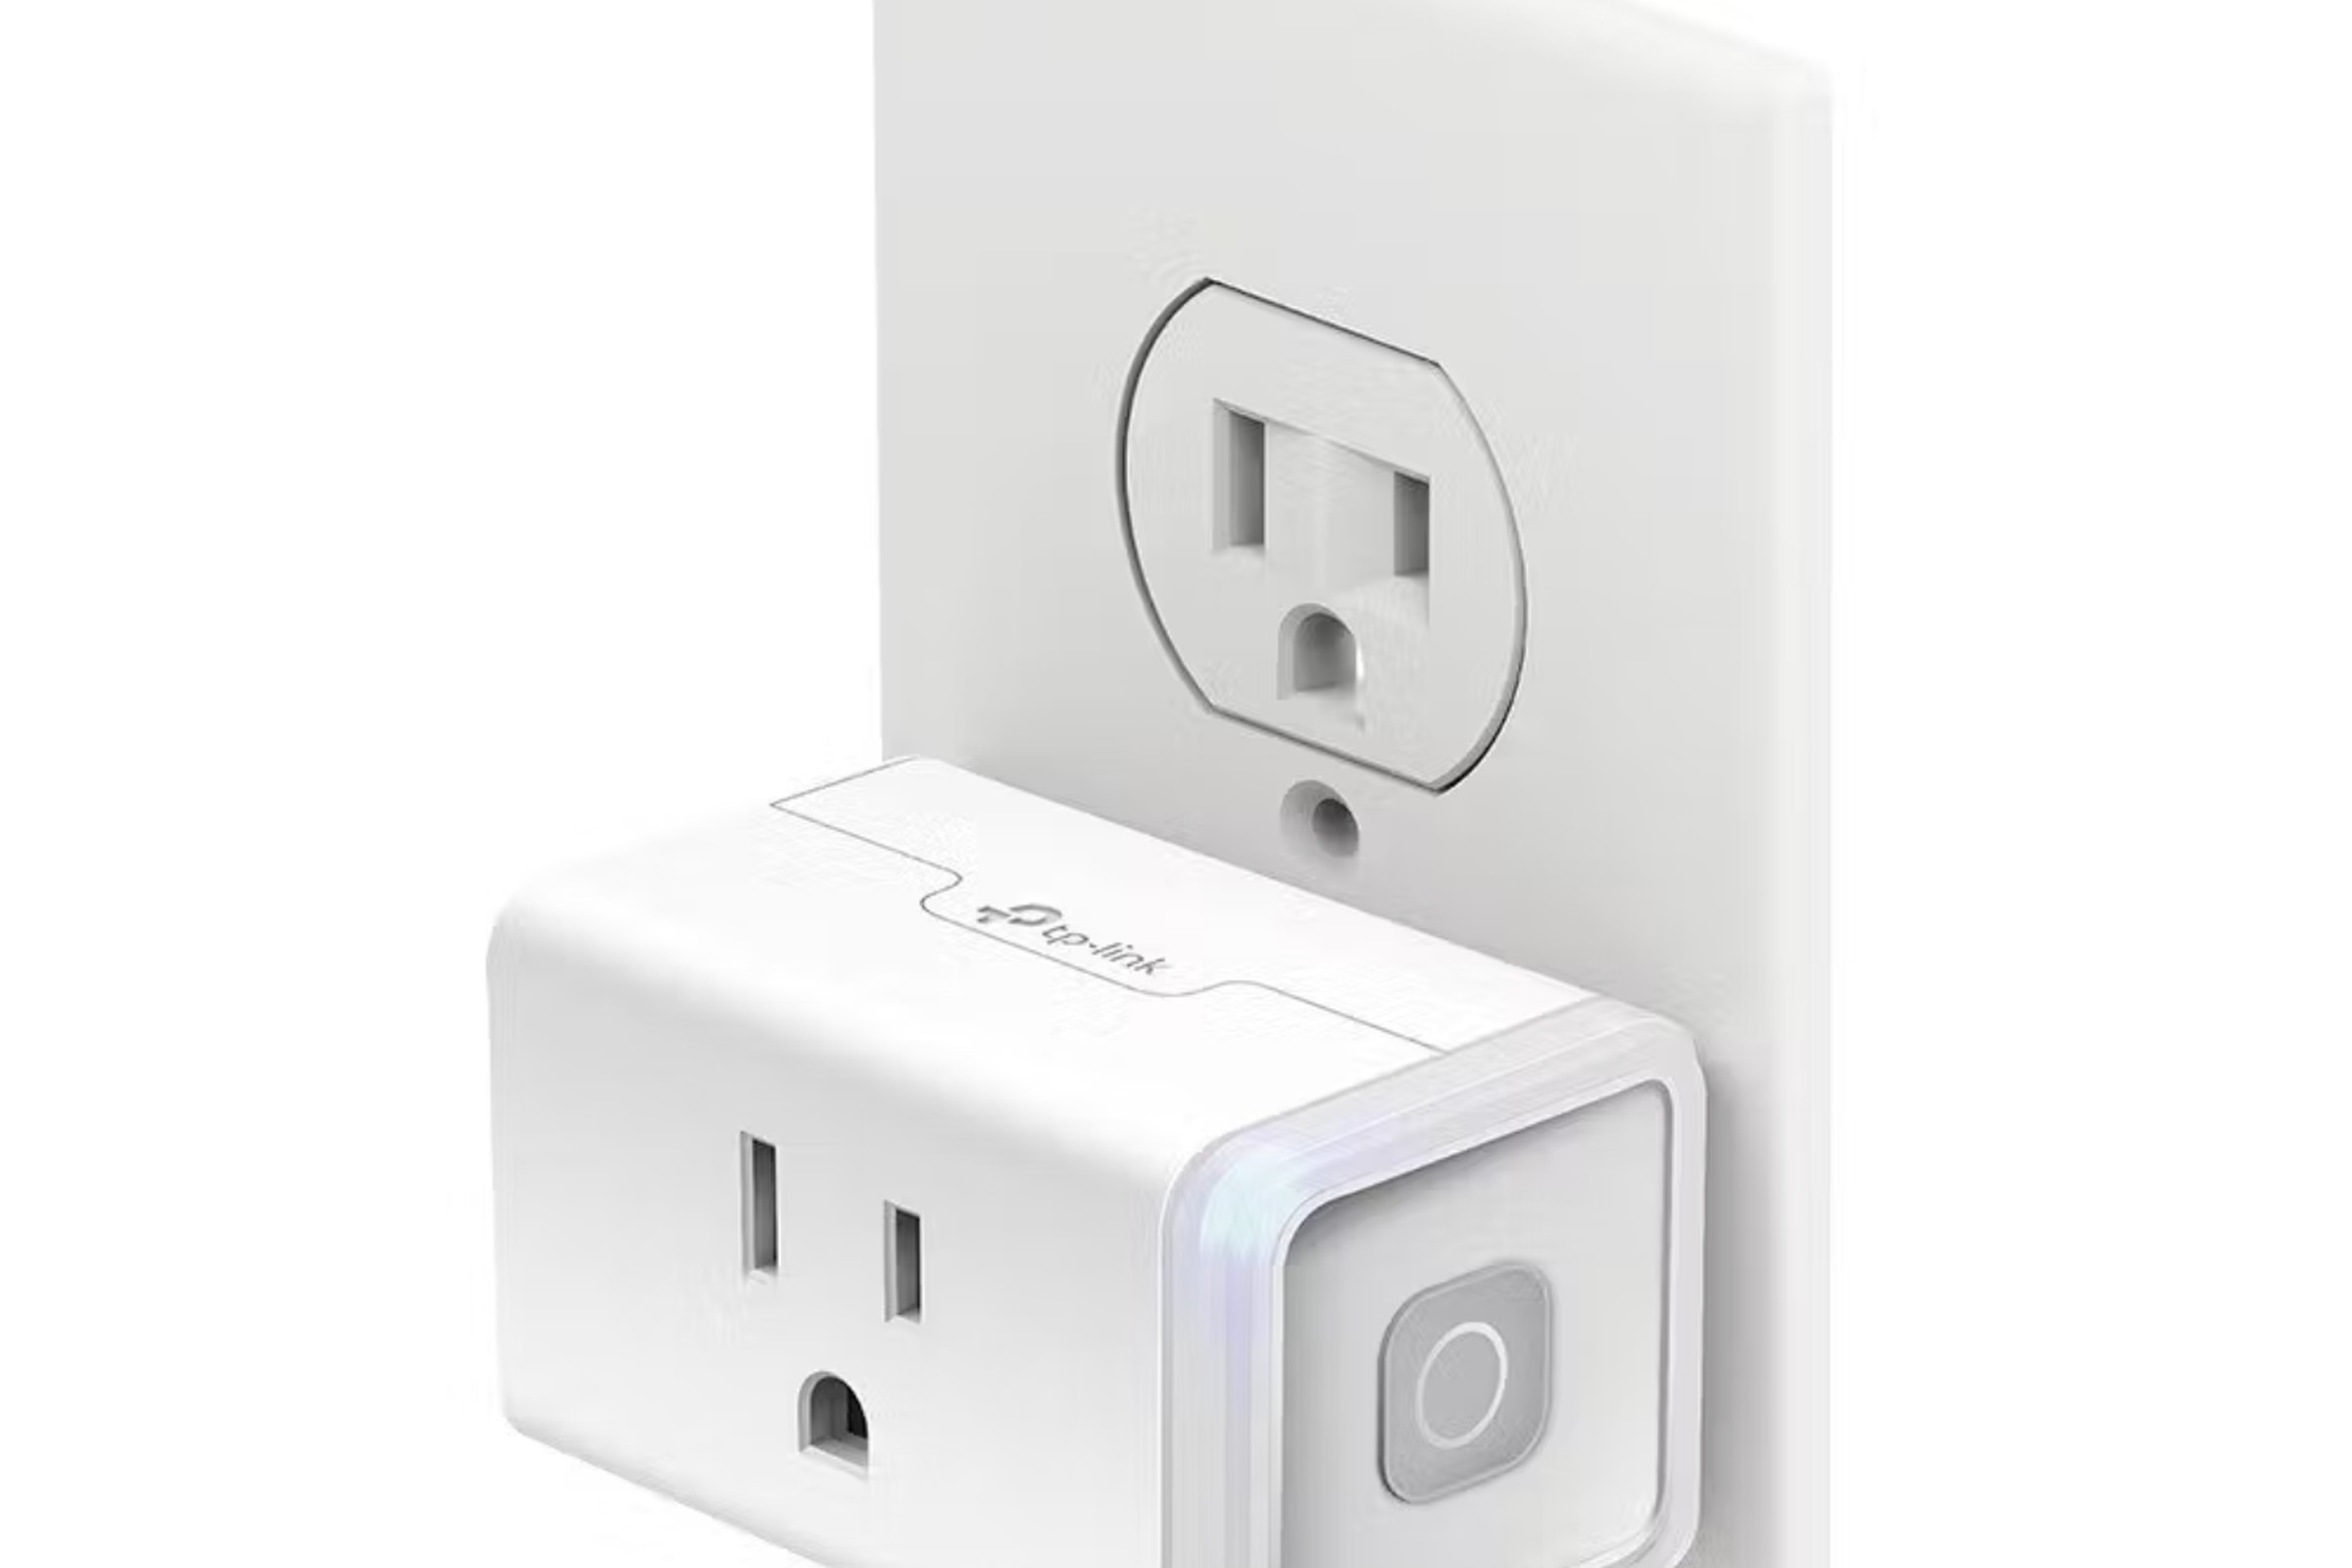 White plug plugged into electrical socket.